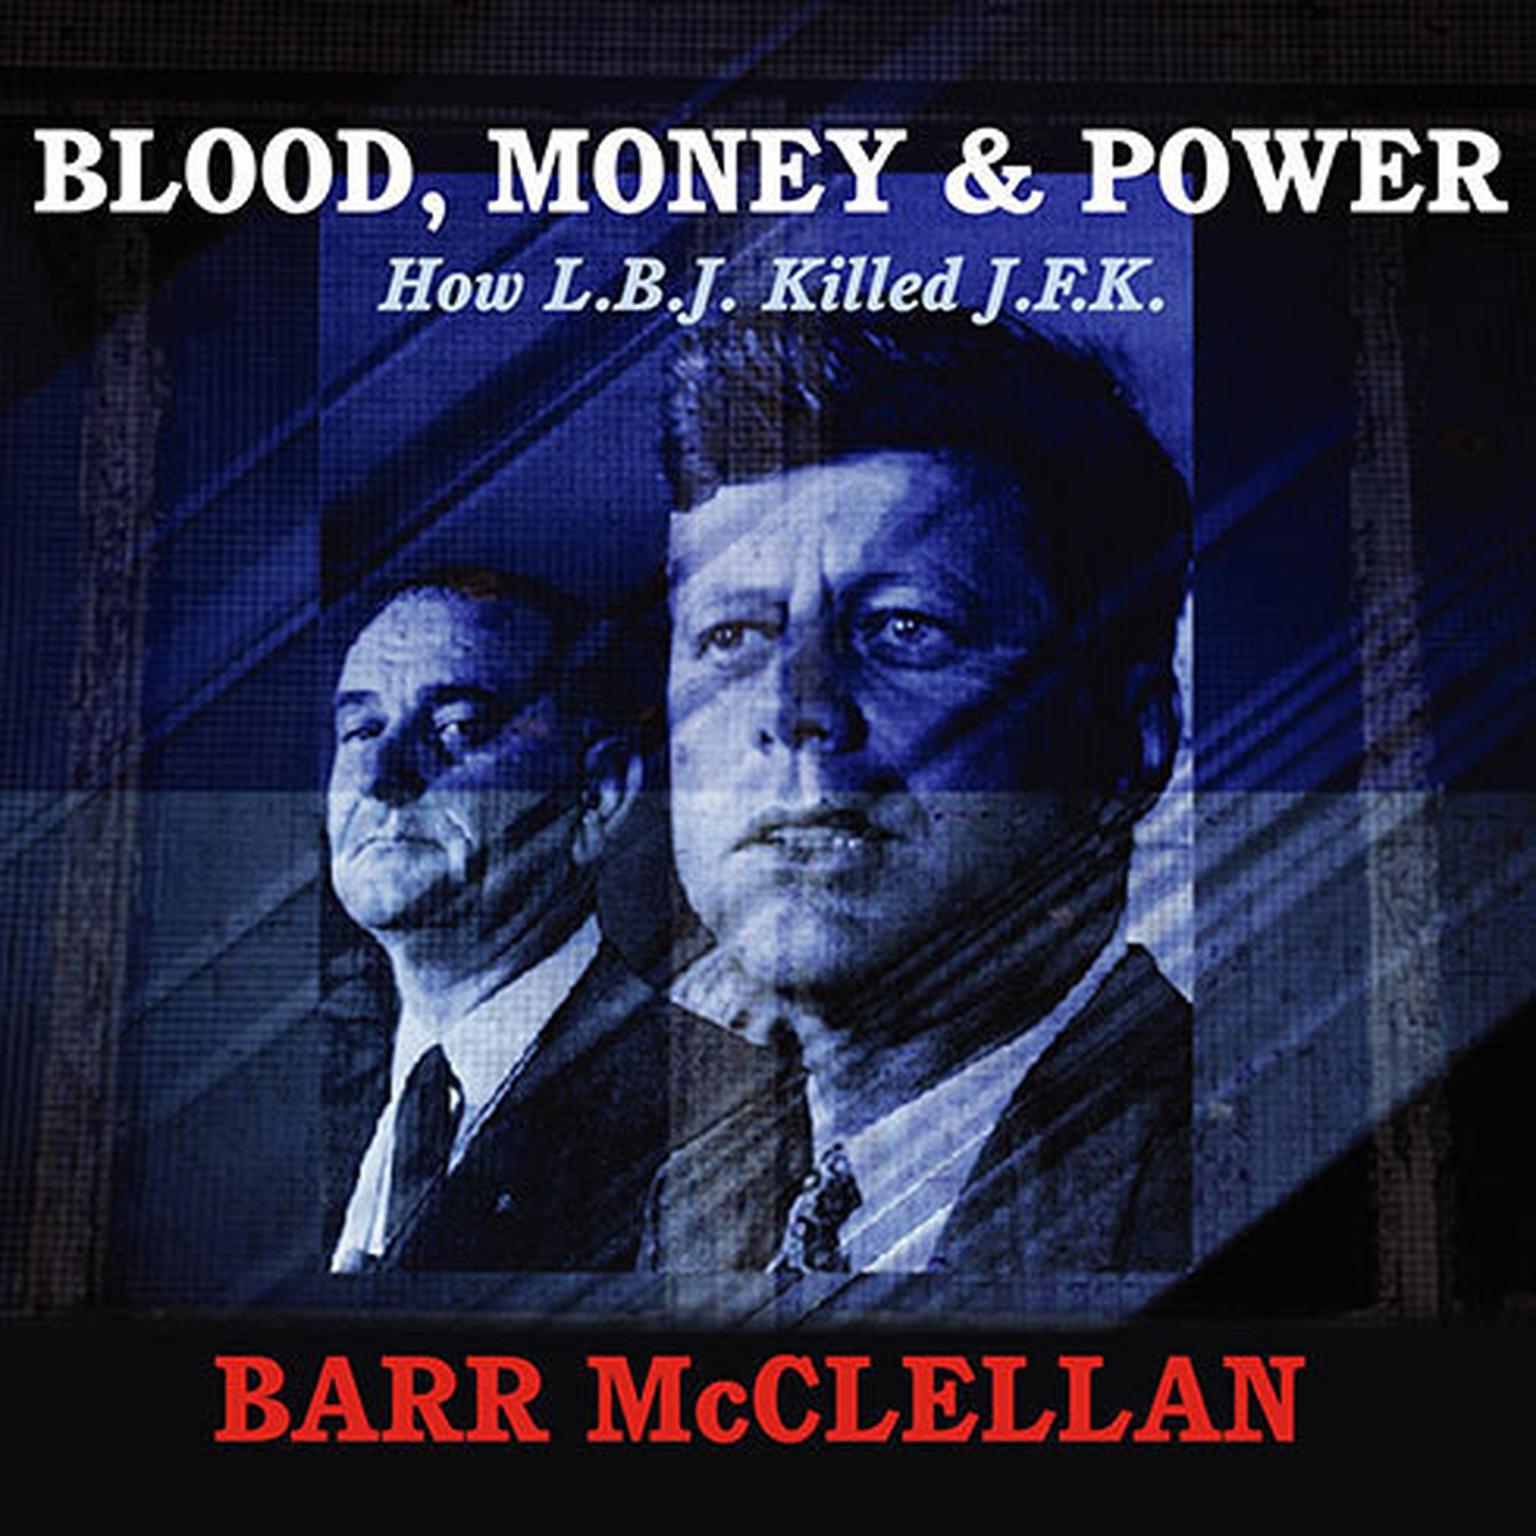 Blood, Money & Power: How L.B.J. Killed J.F.K. Audiobook, by Barr McClellan